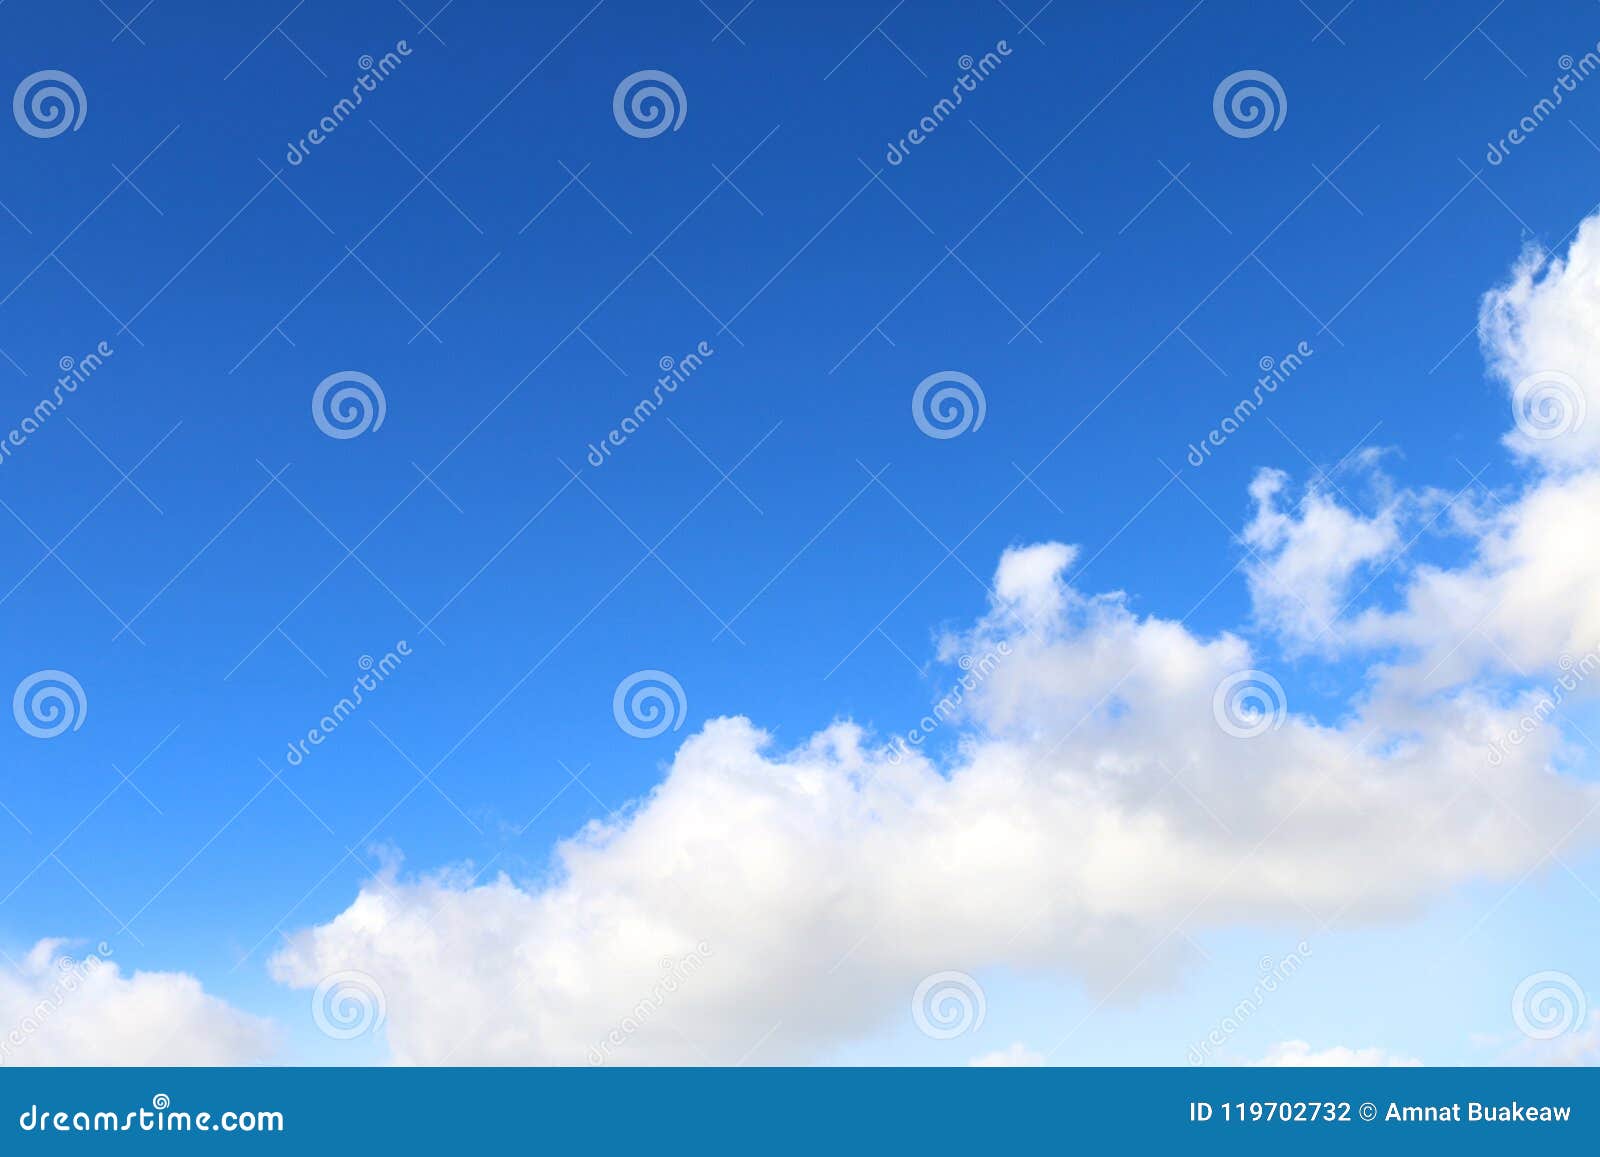 sky, blue sky soft cloud with fluffy clouds big, sky blue cloud background,  cloud landscape sky clear Stock Photo